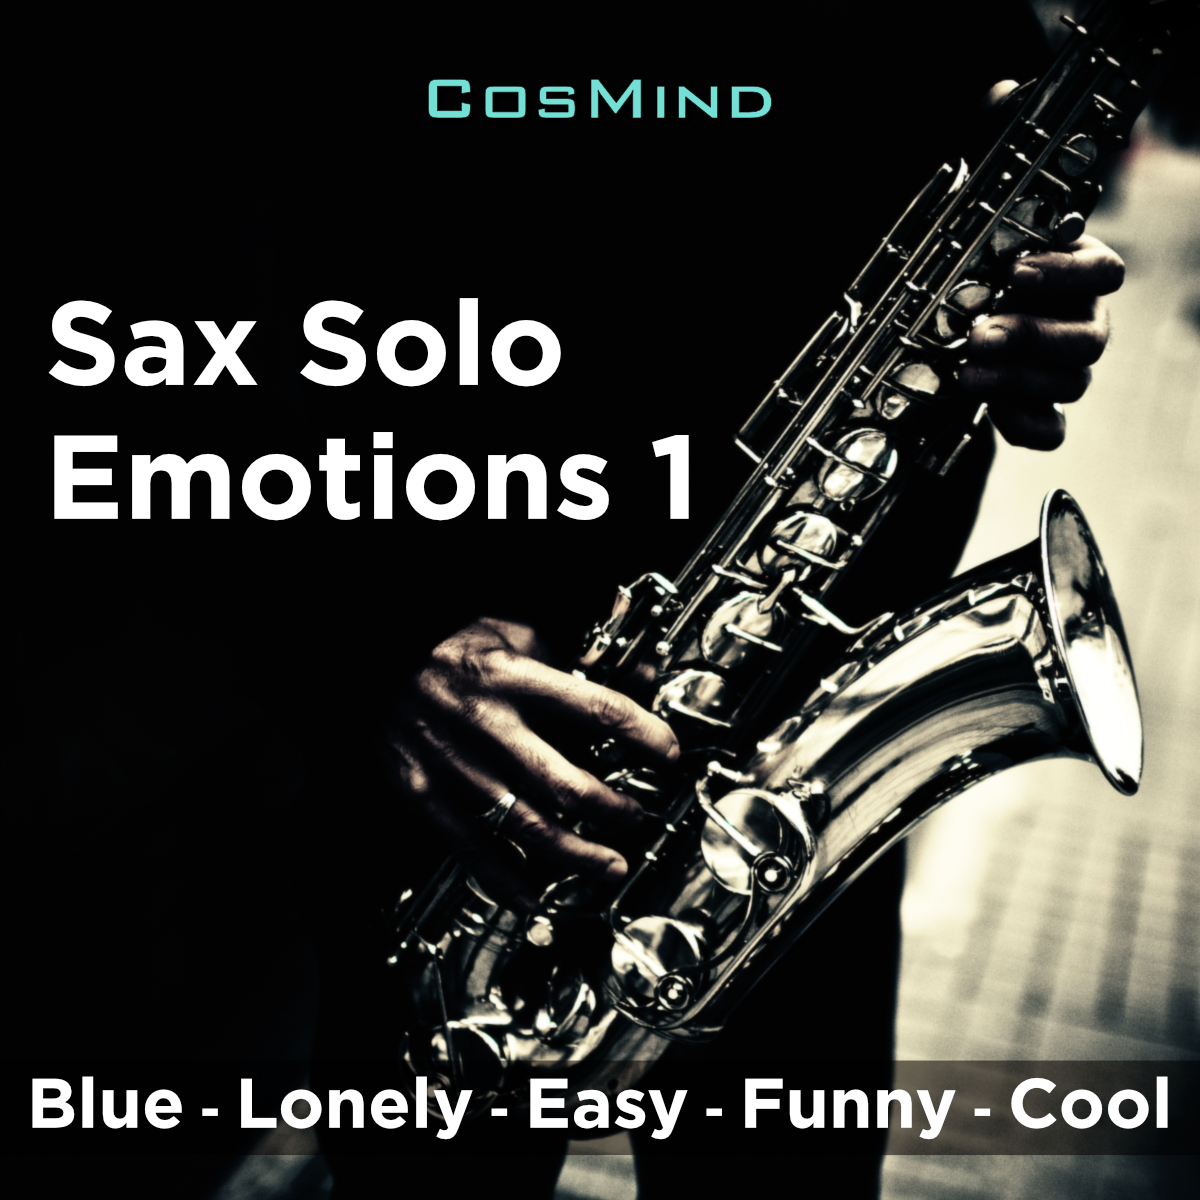 Sax-Solo Emotions (CD1)